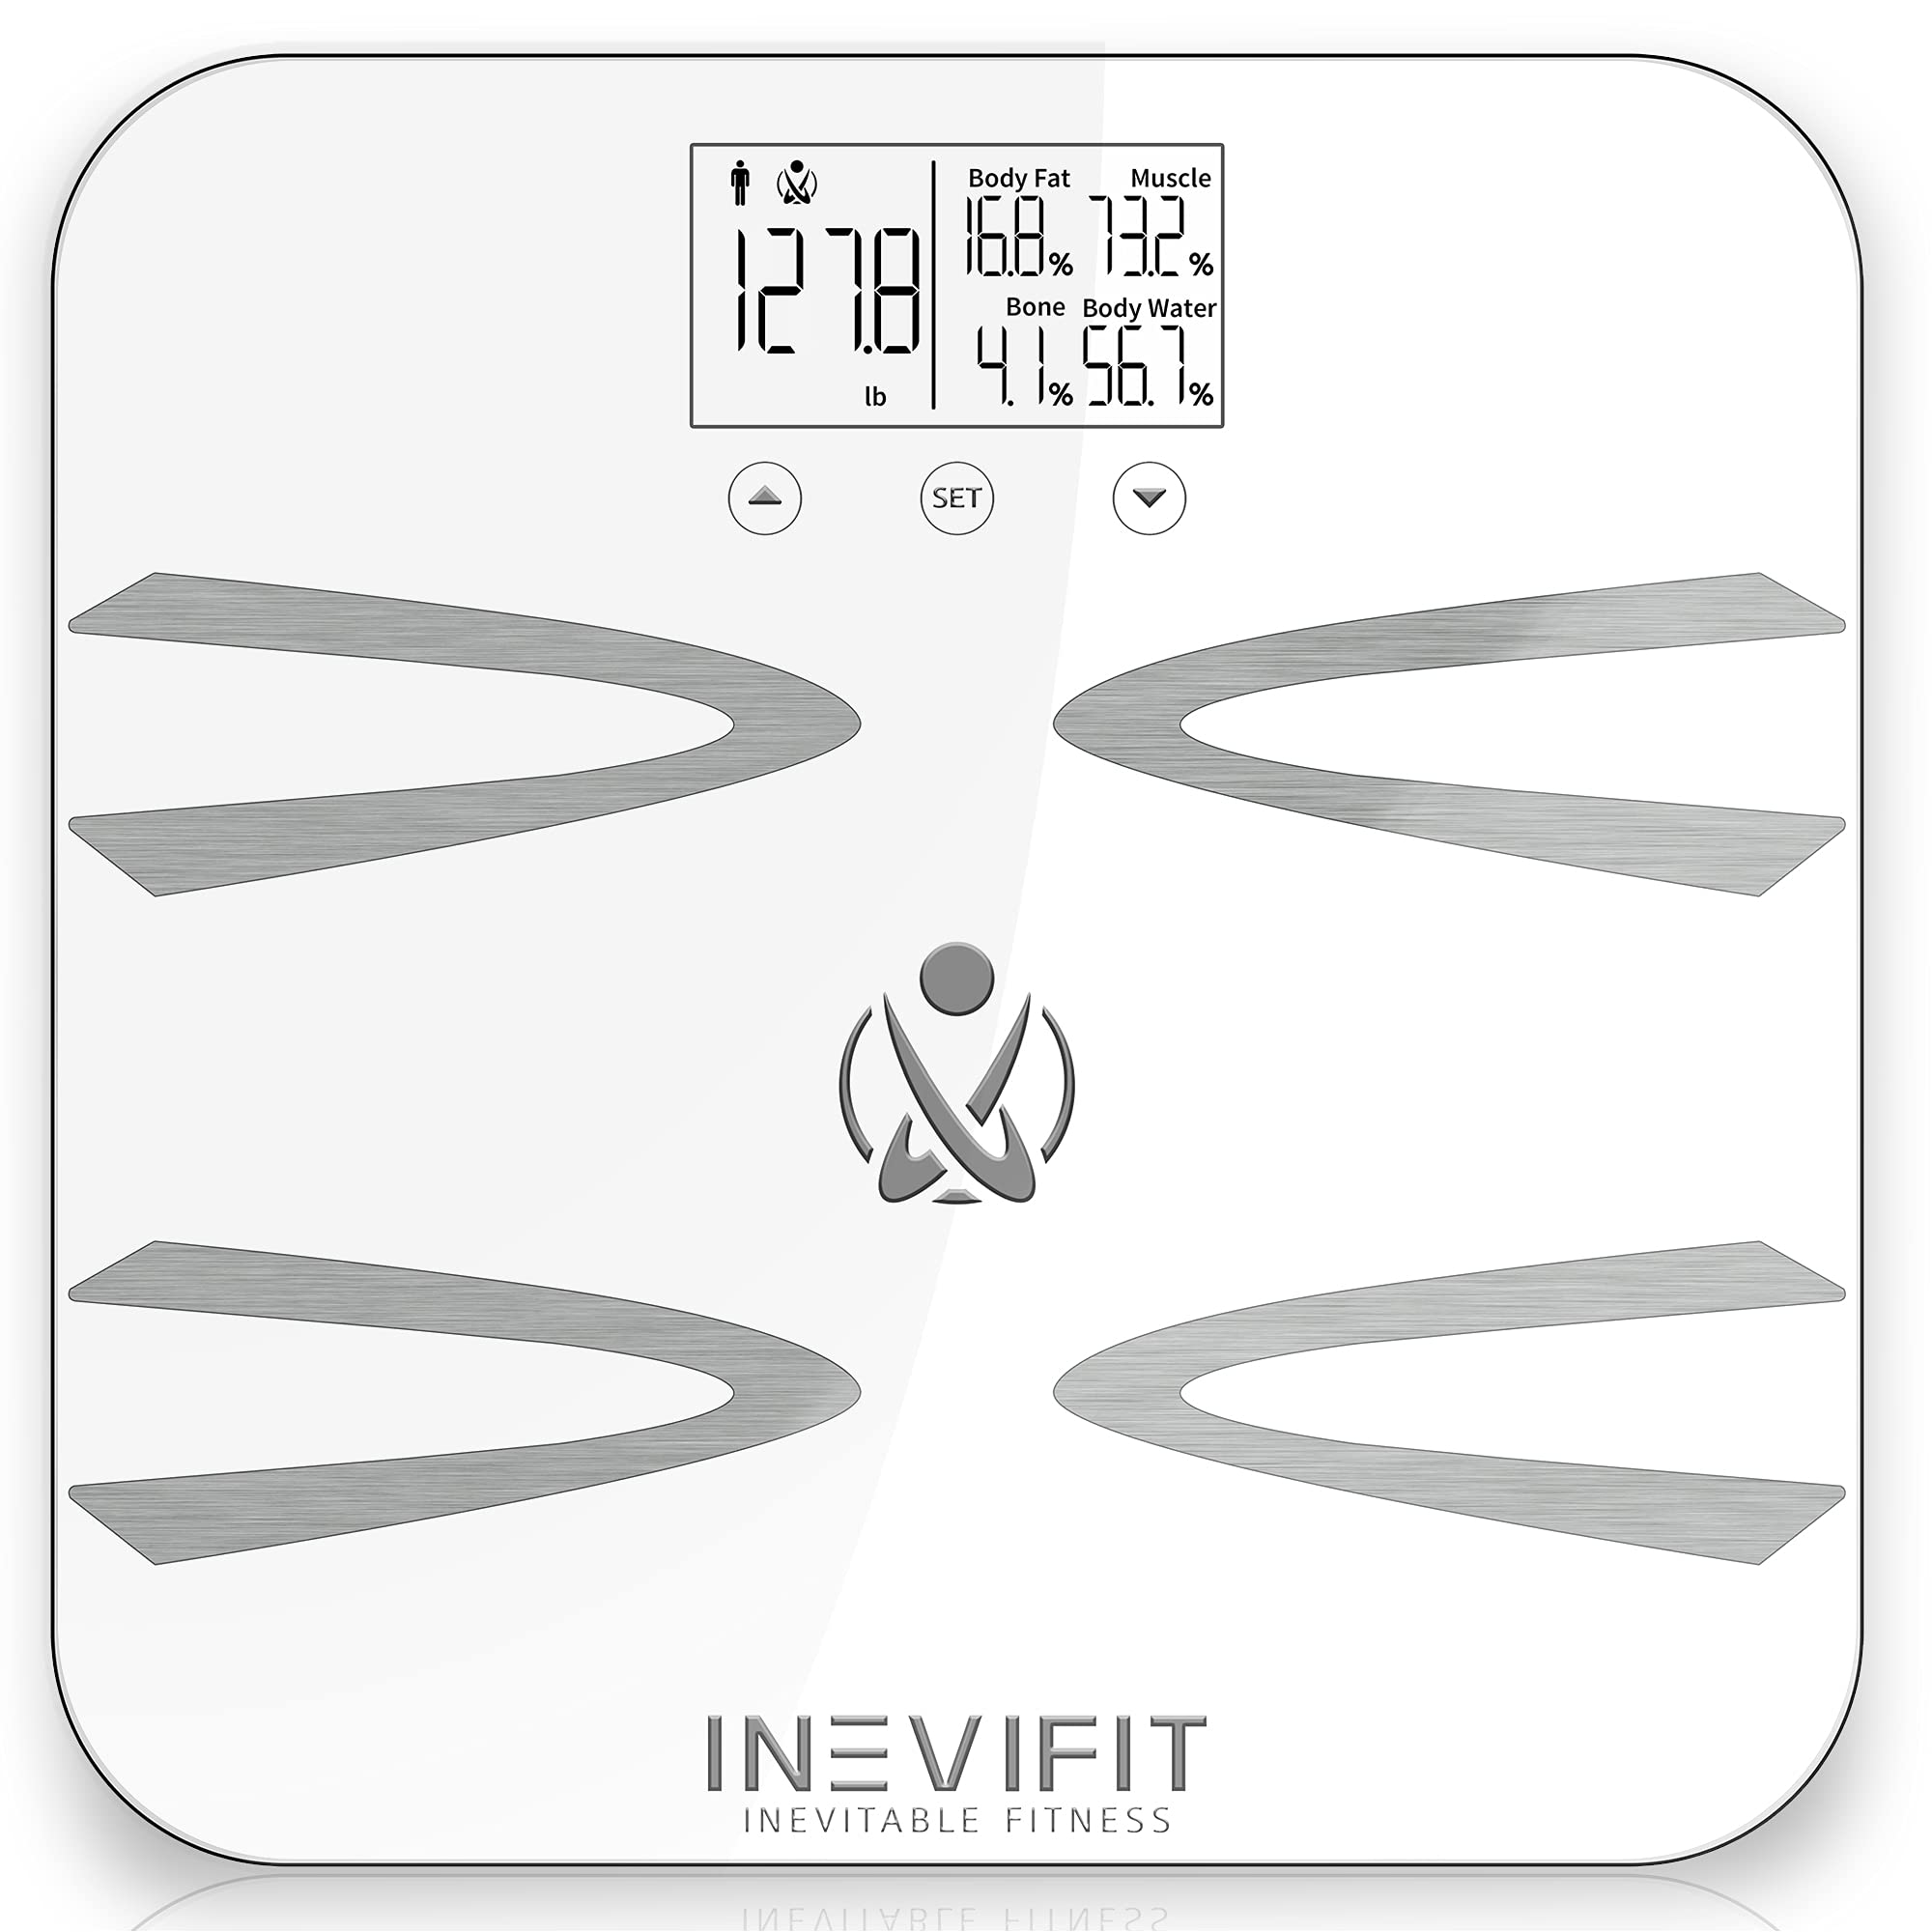 INEVIFIT Bathroom Scale, Highly Accurate Digital Bathroom Body Scale Measures